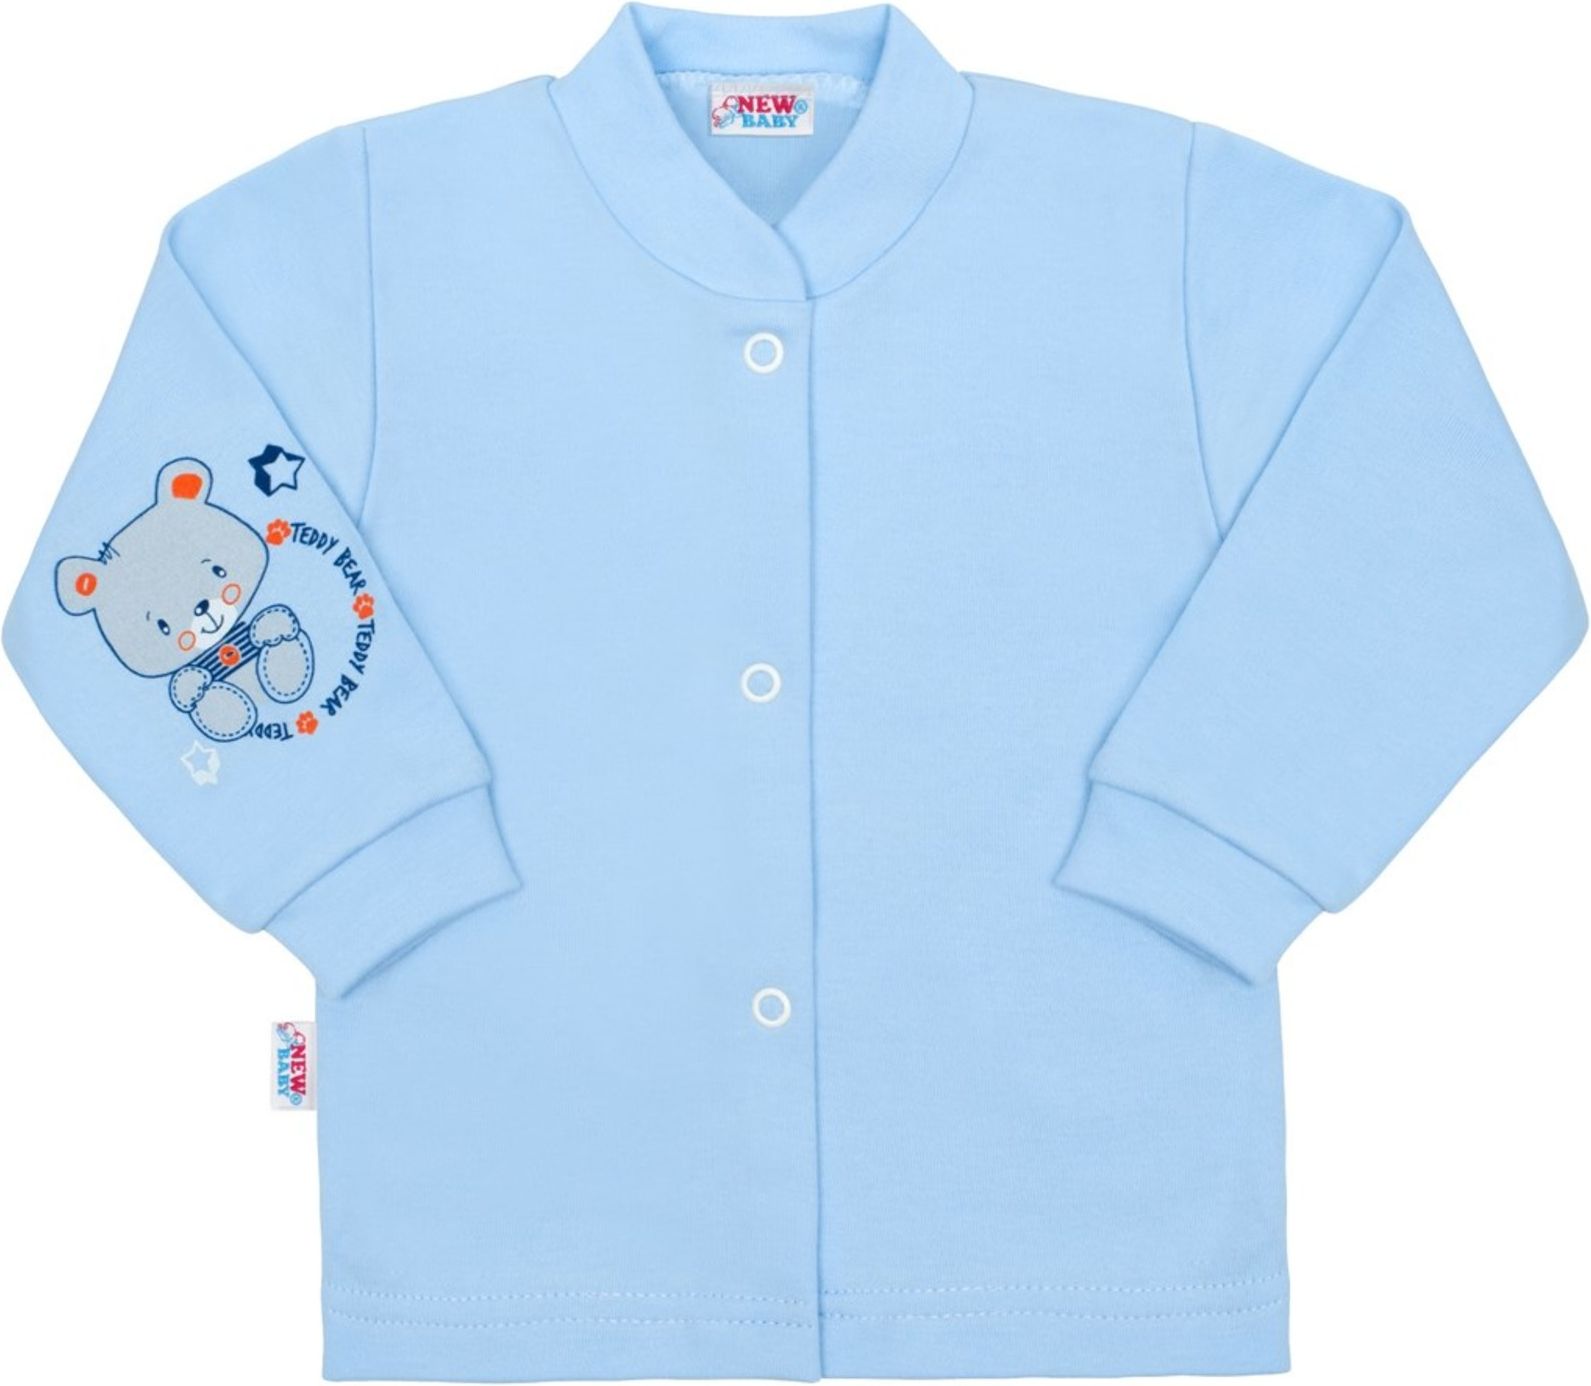 Kojenecký kabátek New Baby teddy modrý - Kojenecký kabátek New Baby teddy modrý - obrázek 1